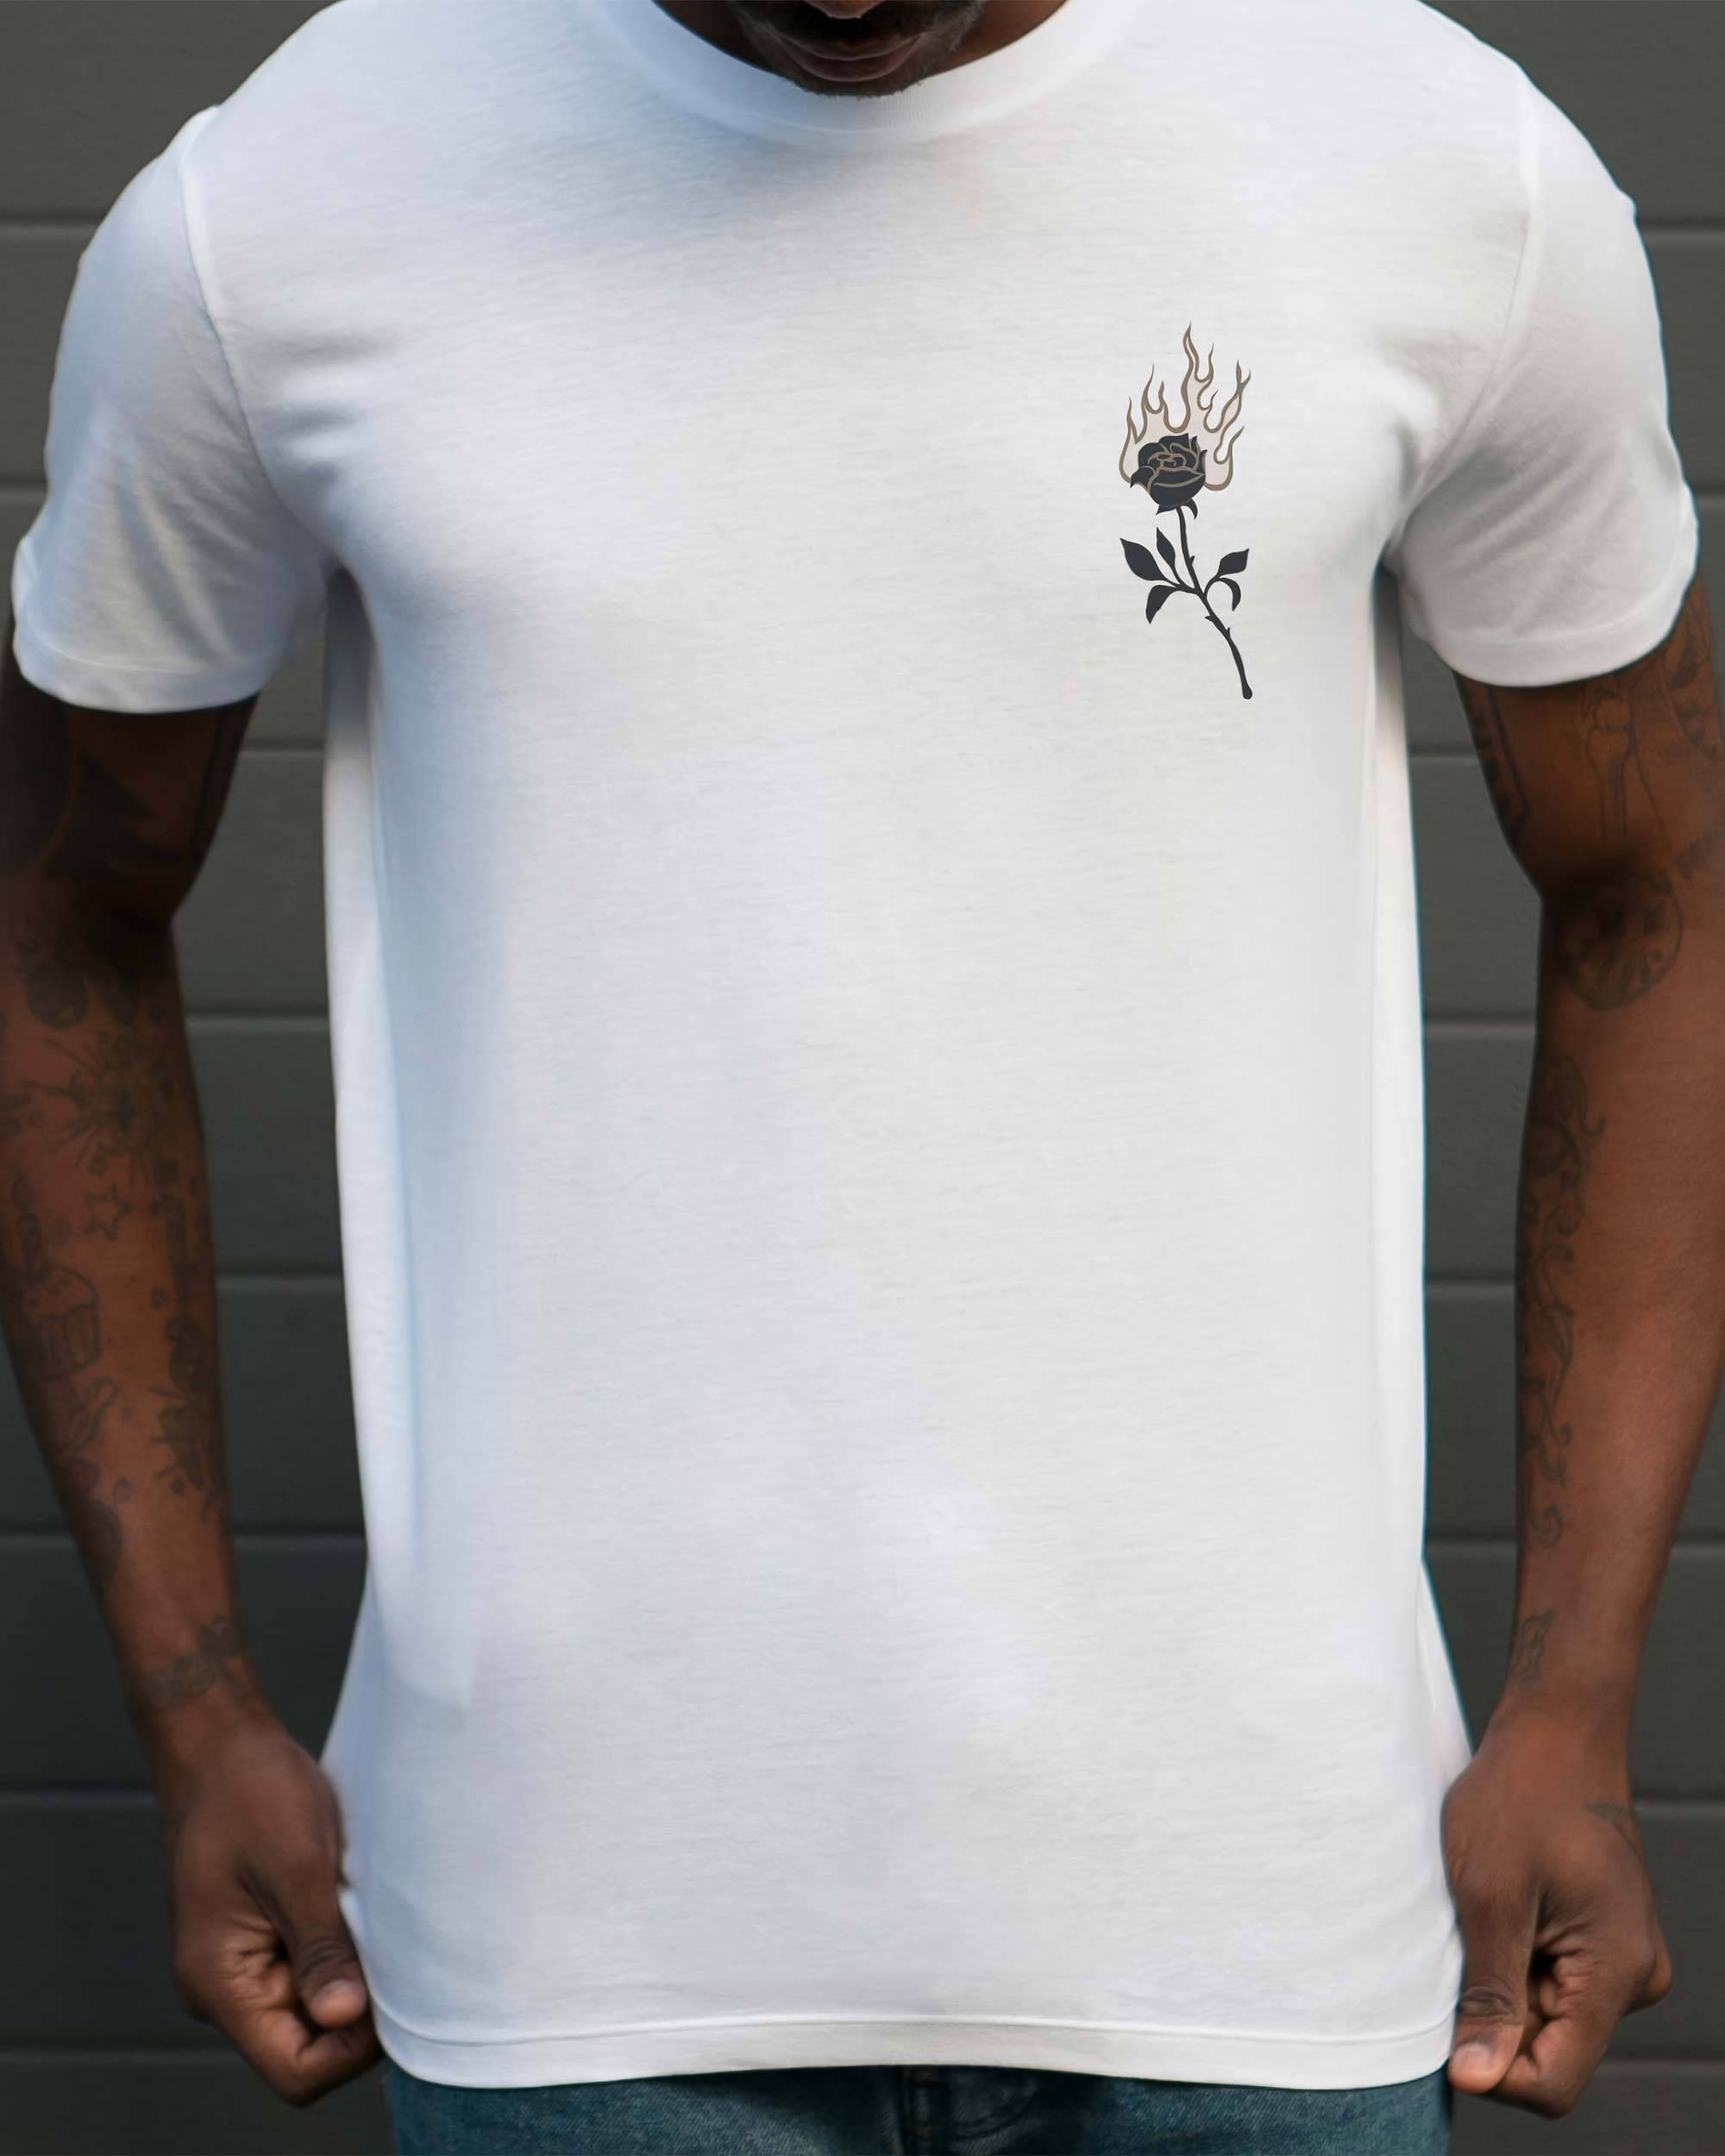 T-shirt Burning Rose de couleur Blanc par Thymoos